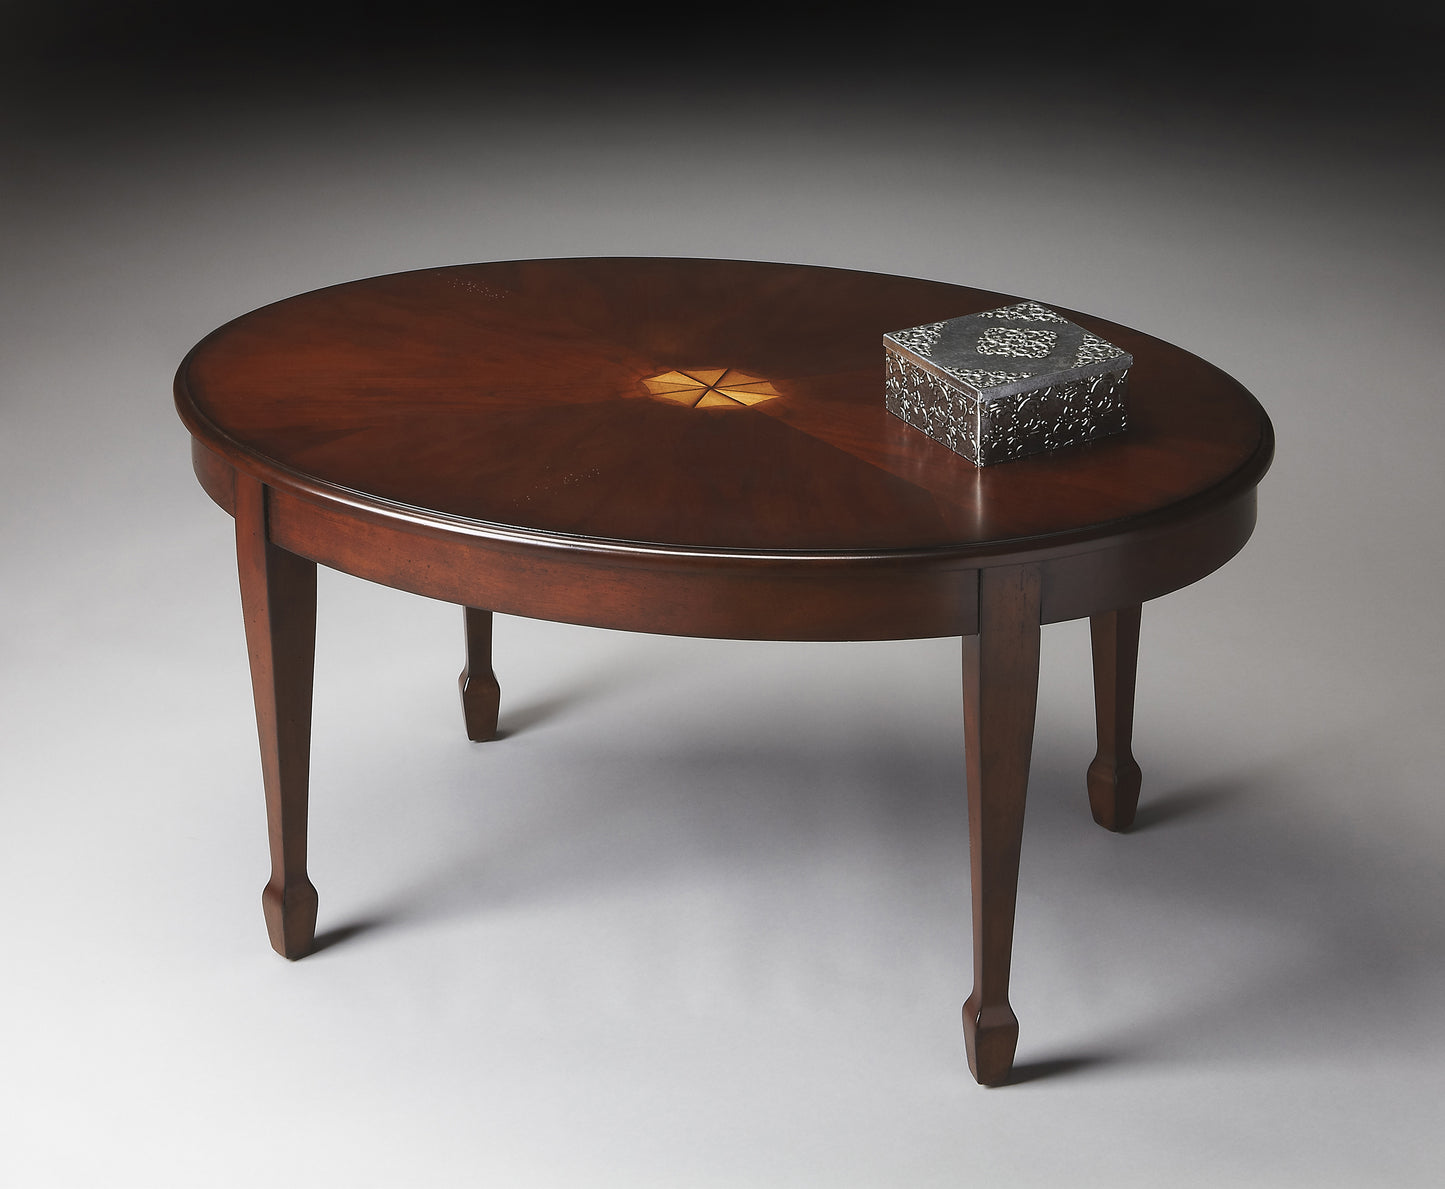 Clayton Oval Wood Coffee Table in Dark Brown  1234024